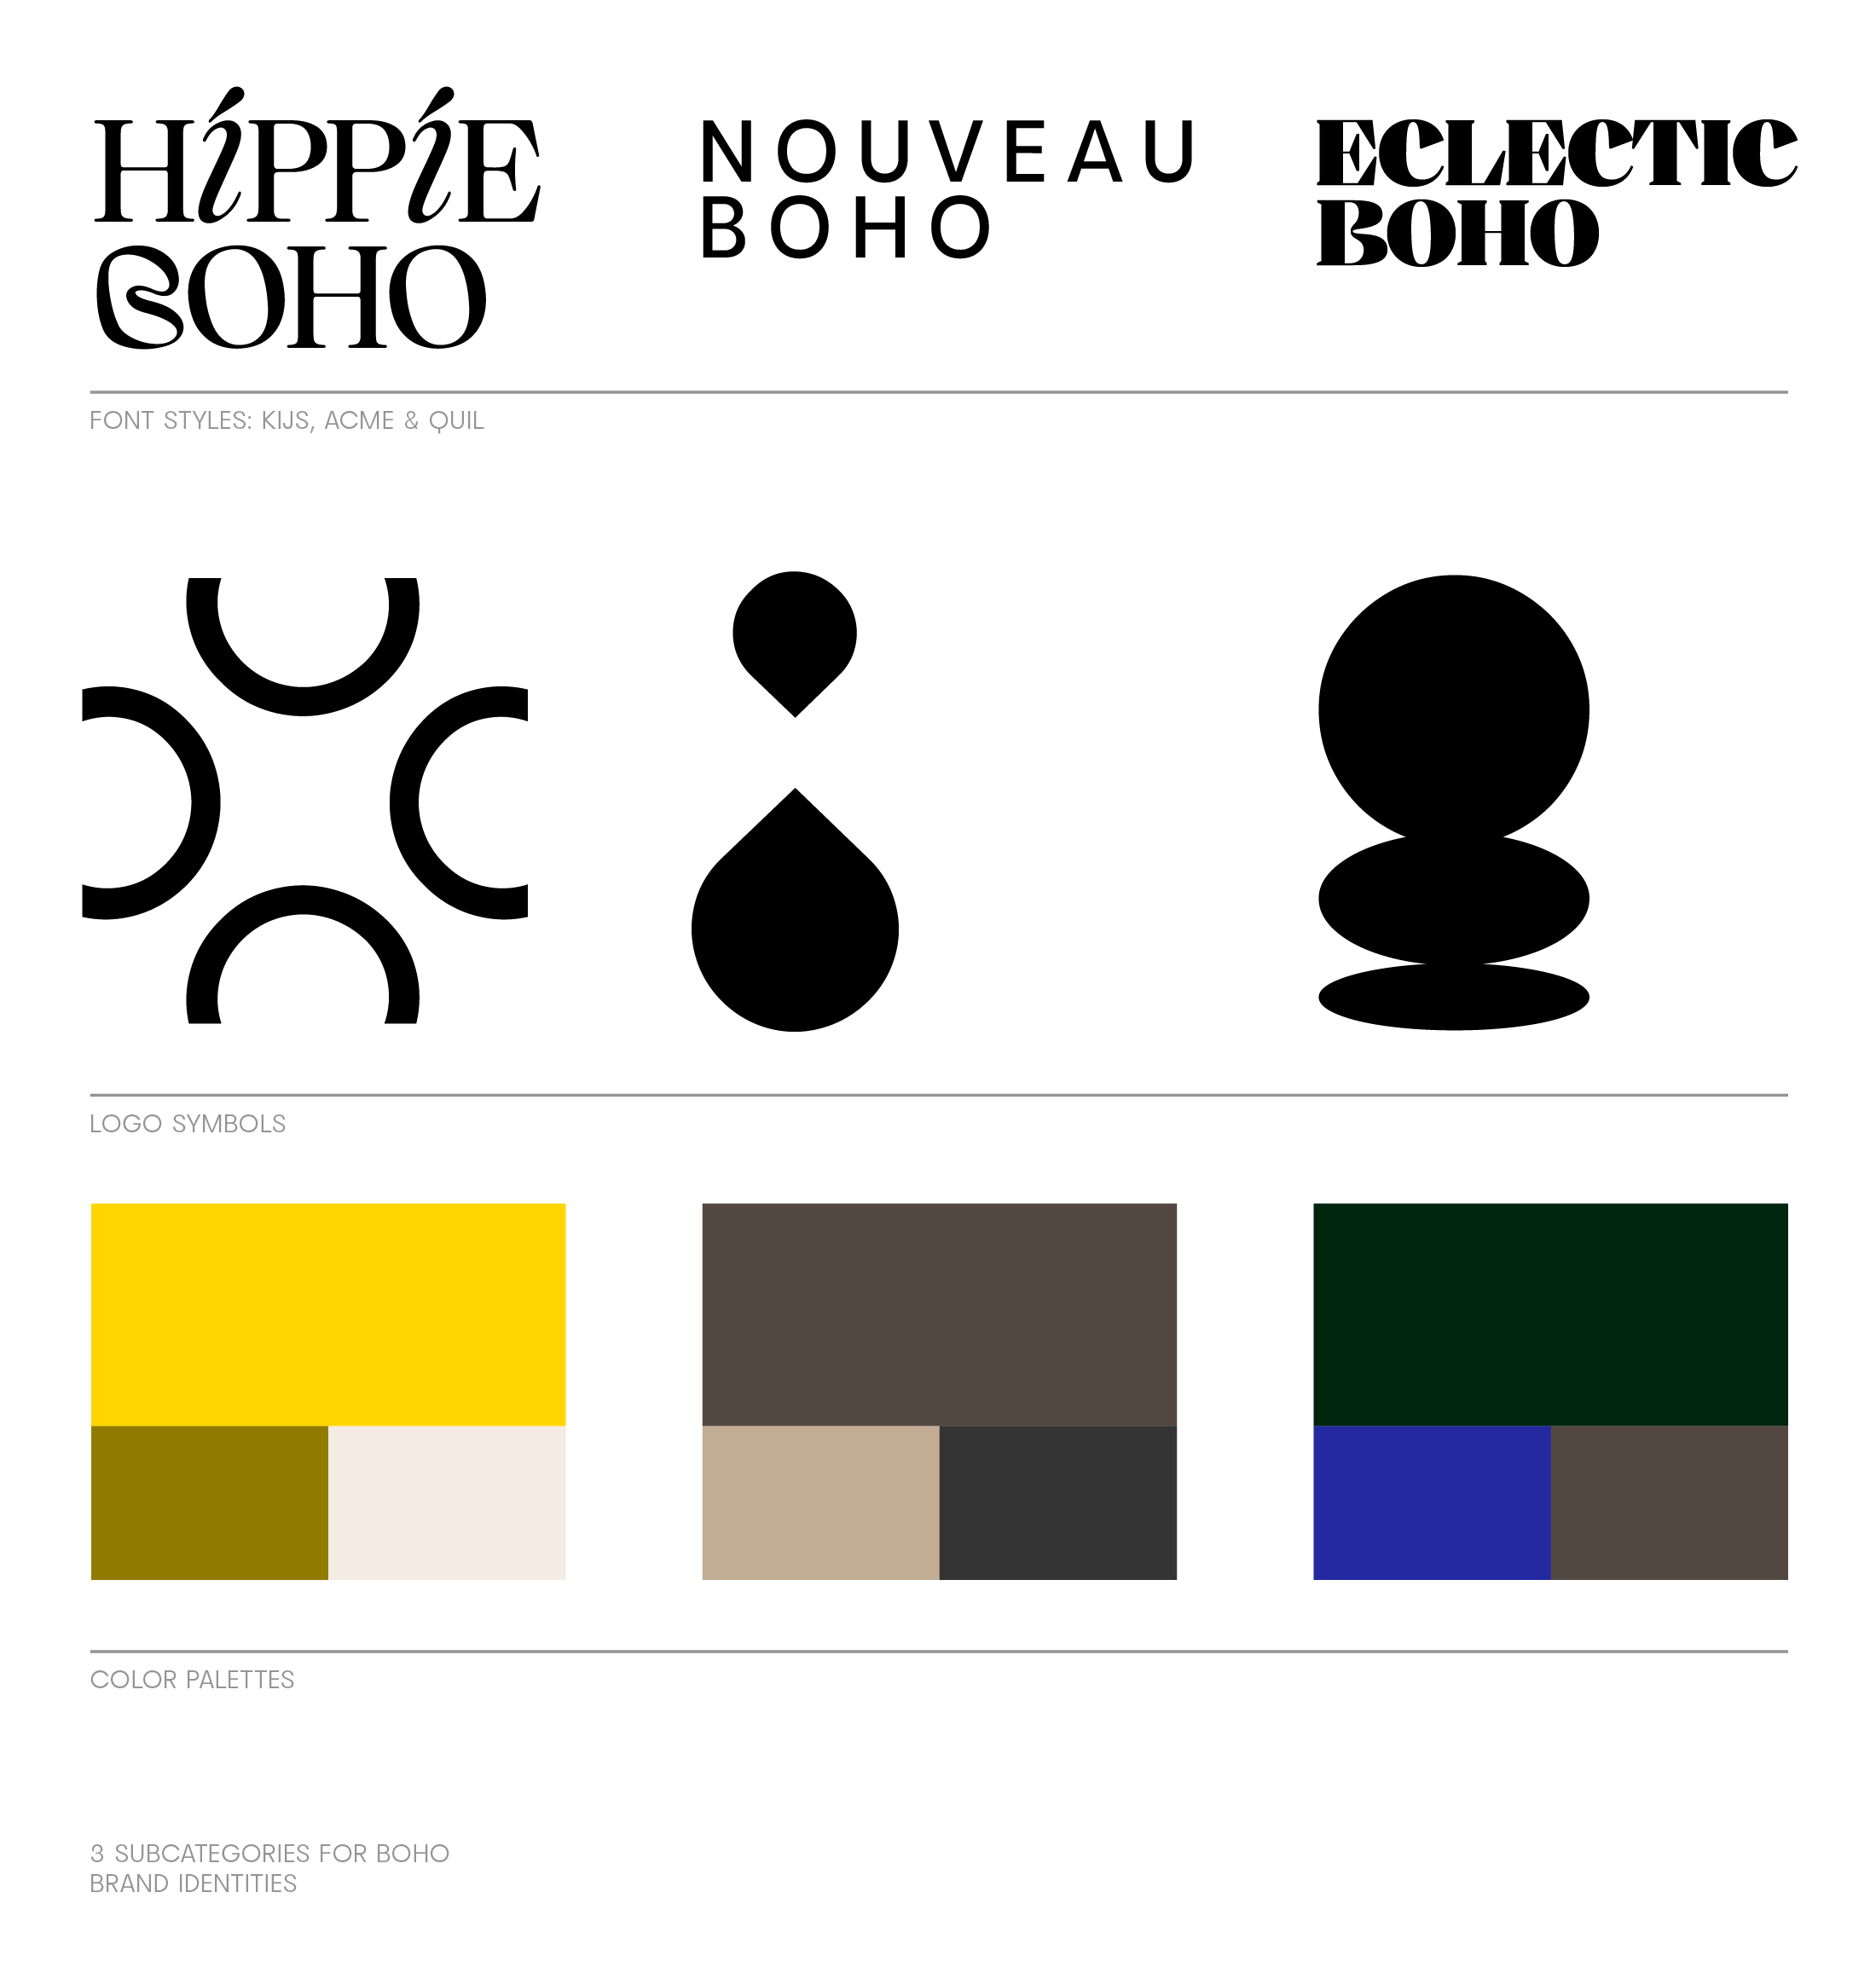 subcategories of Boho logo styles